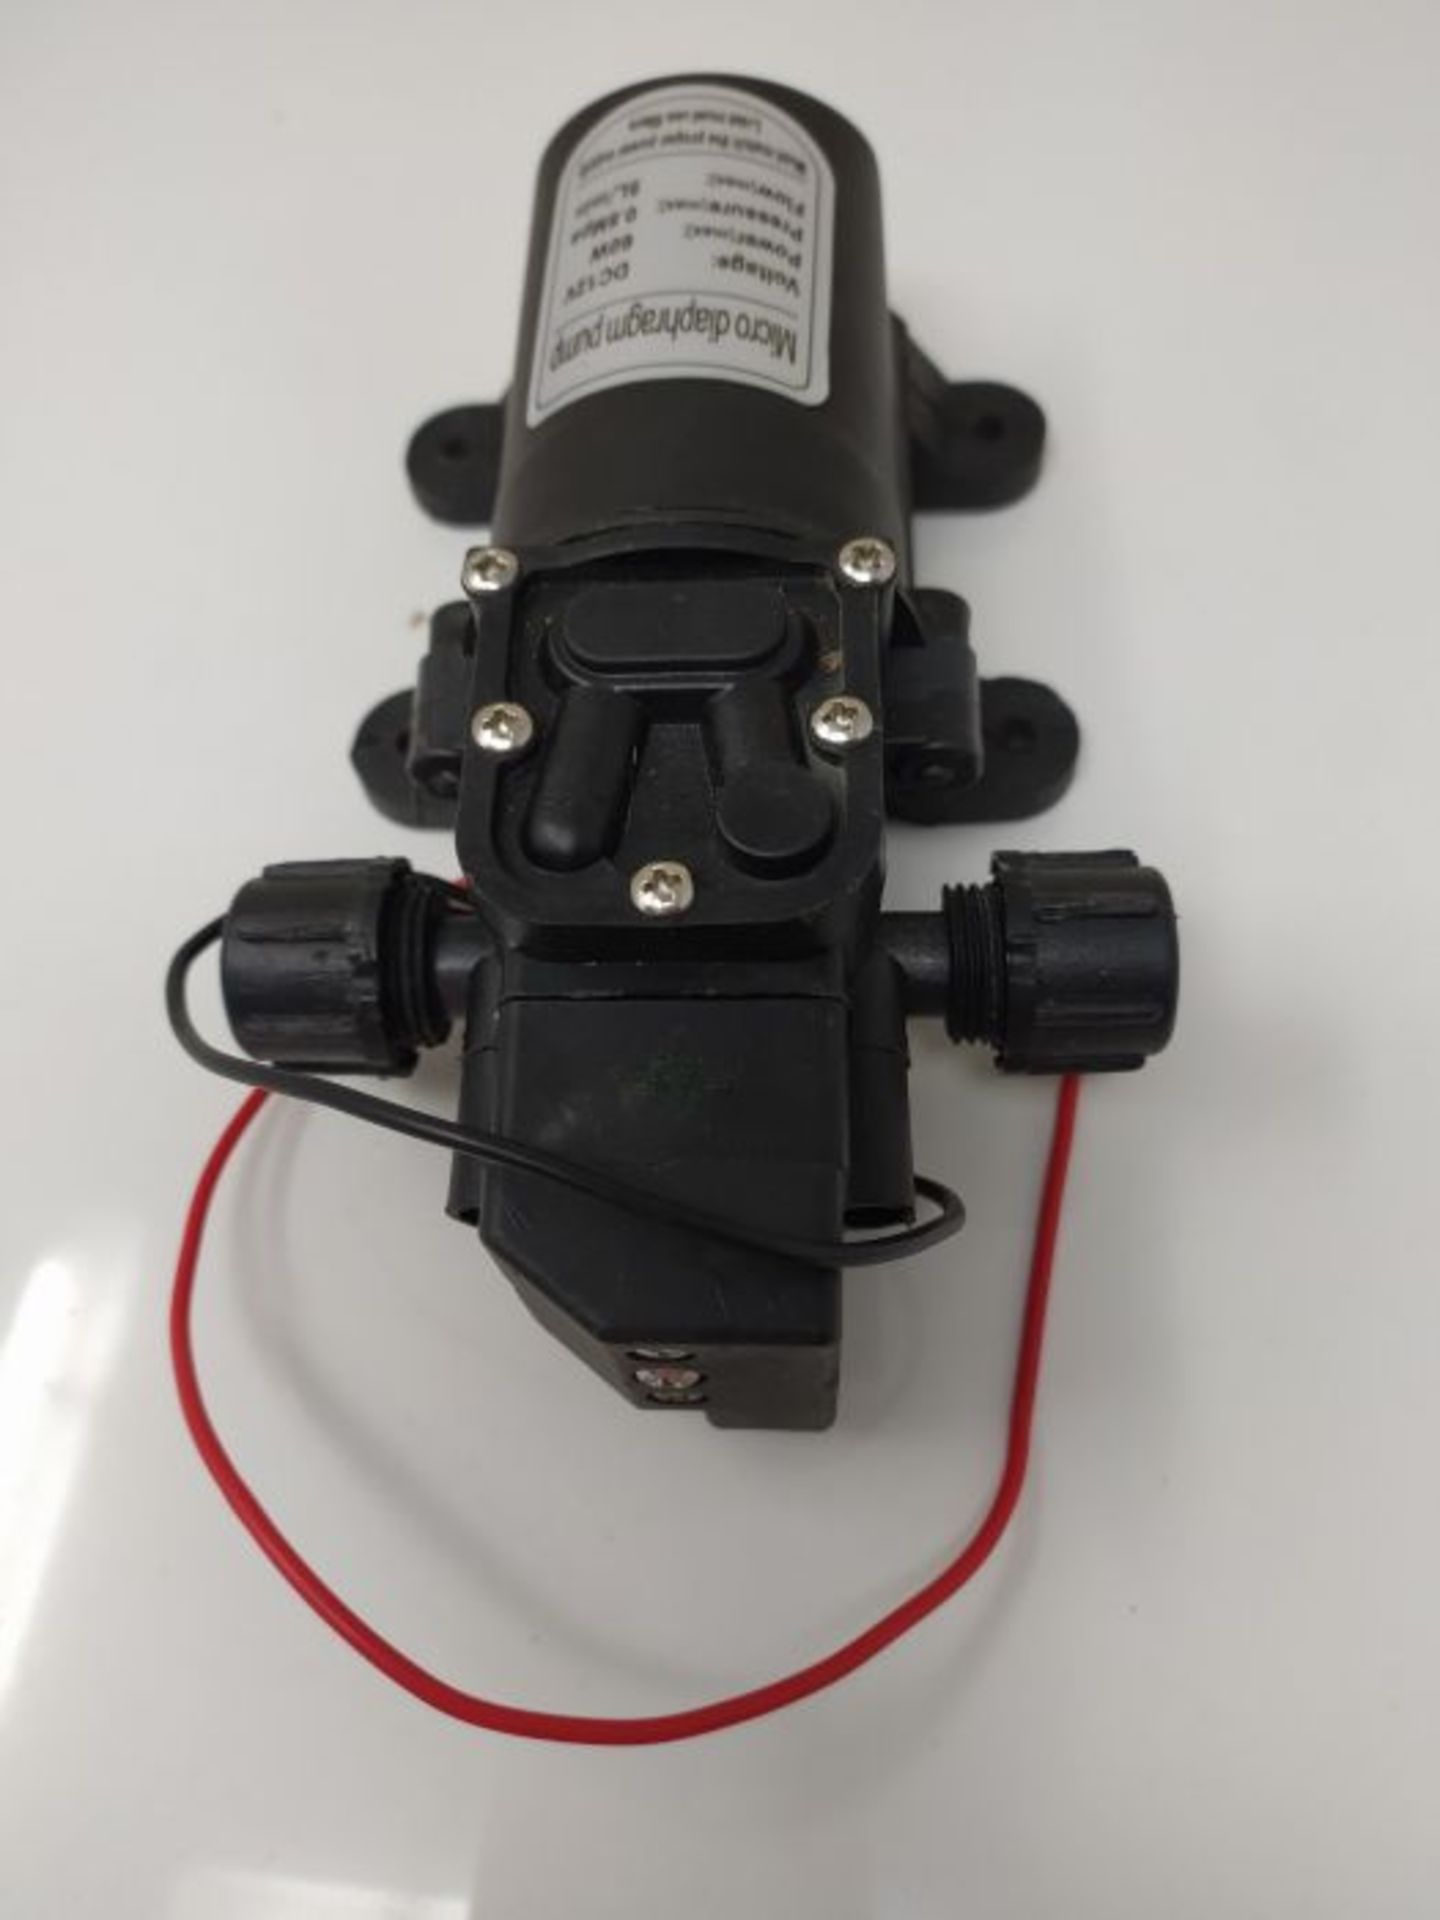 DC 12V 5L/min 60W High Pressure Micro Diaphragm Water Pump Automatic Switch Self Primi - Image 2 of 2